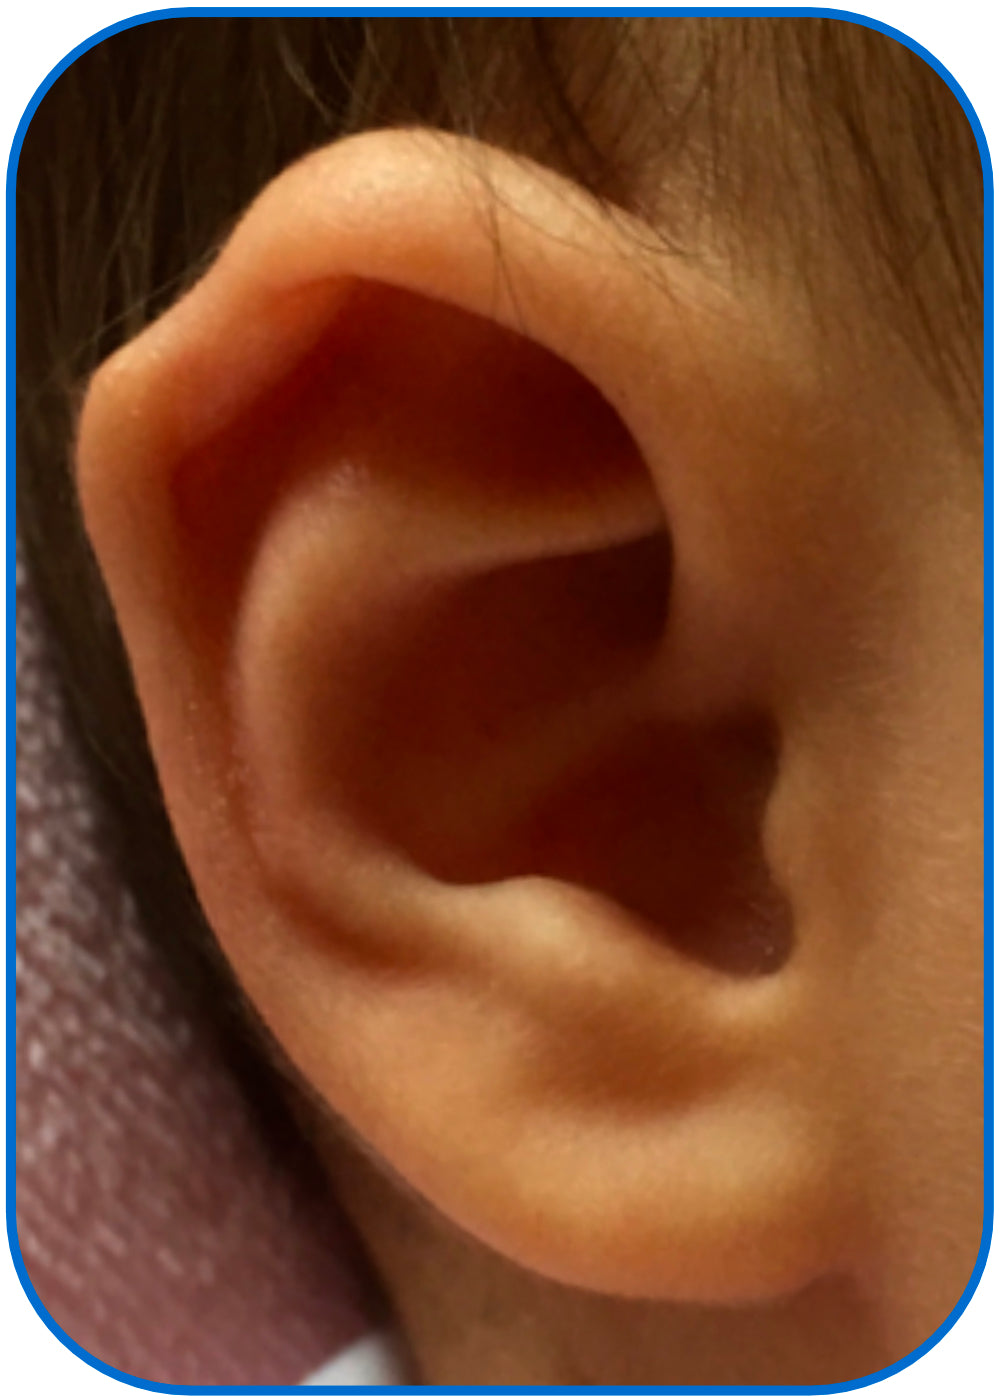 corrected kink in baby ear